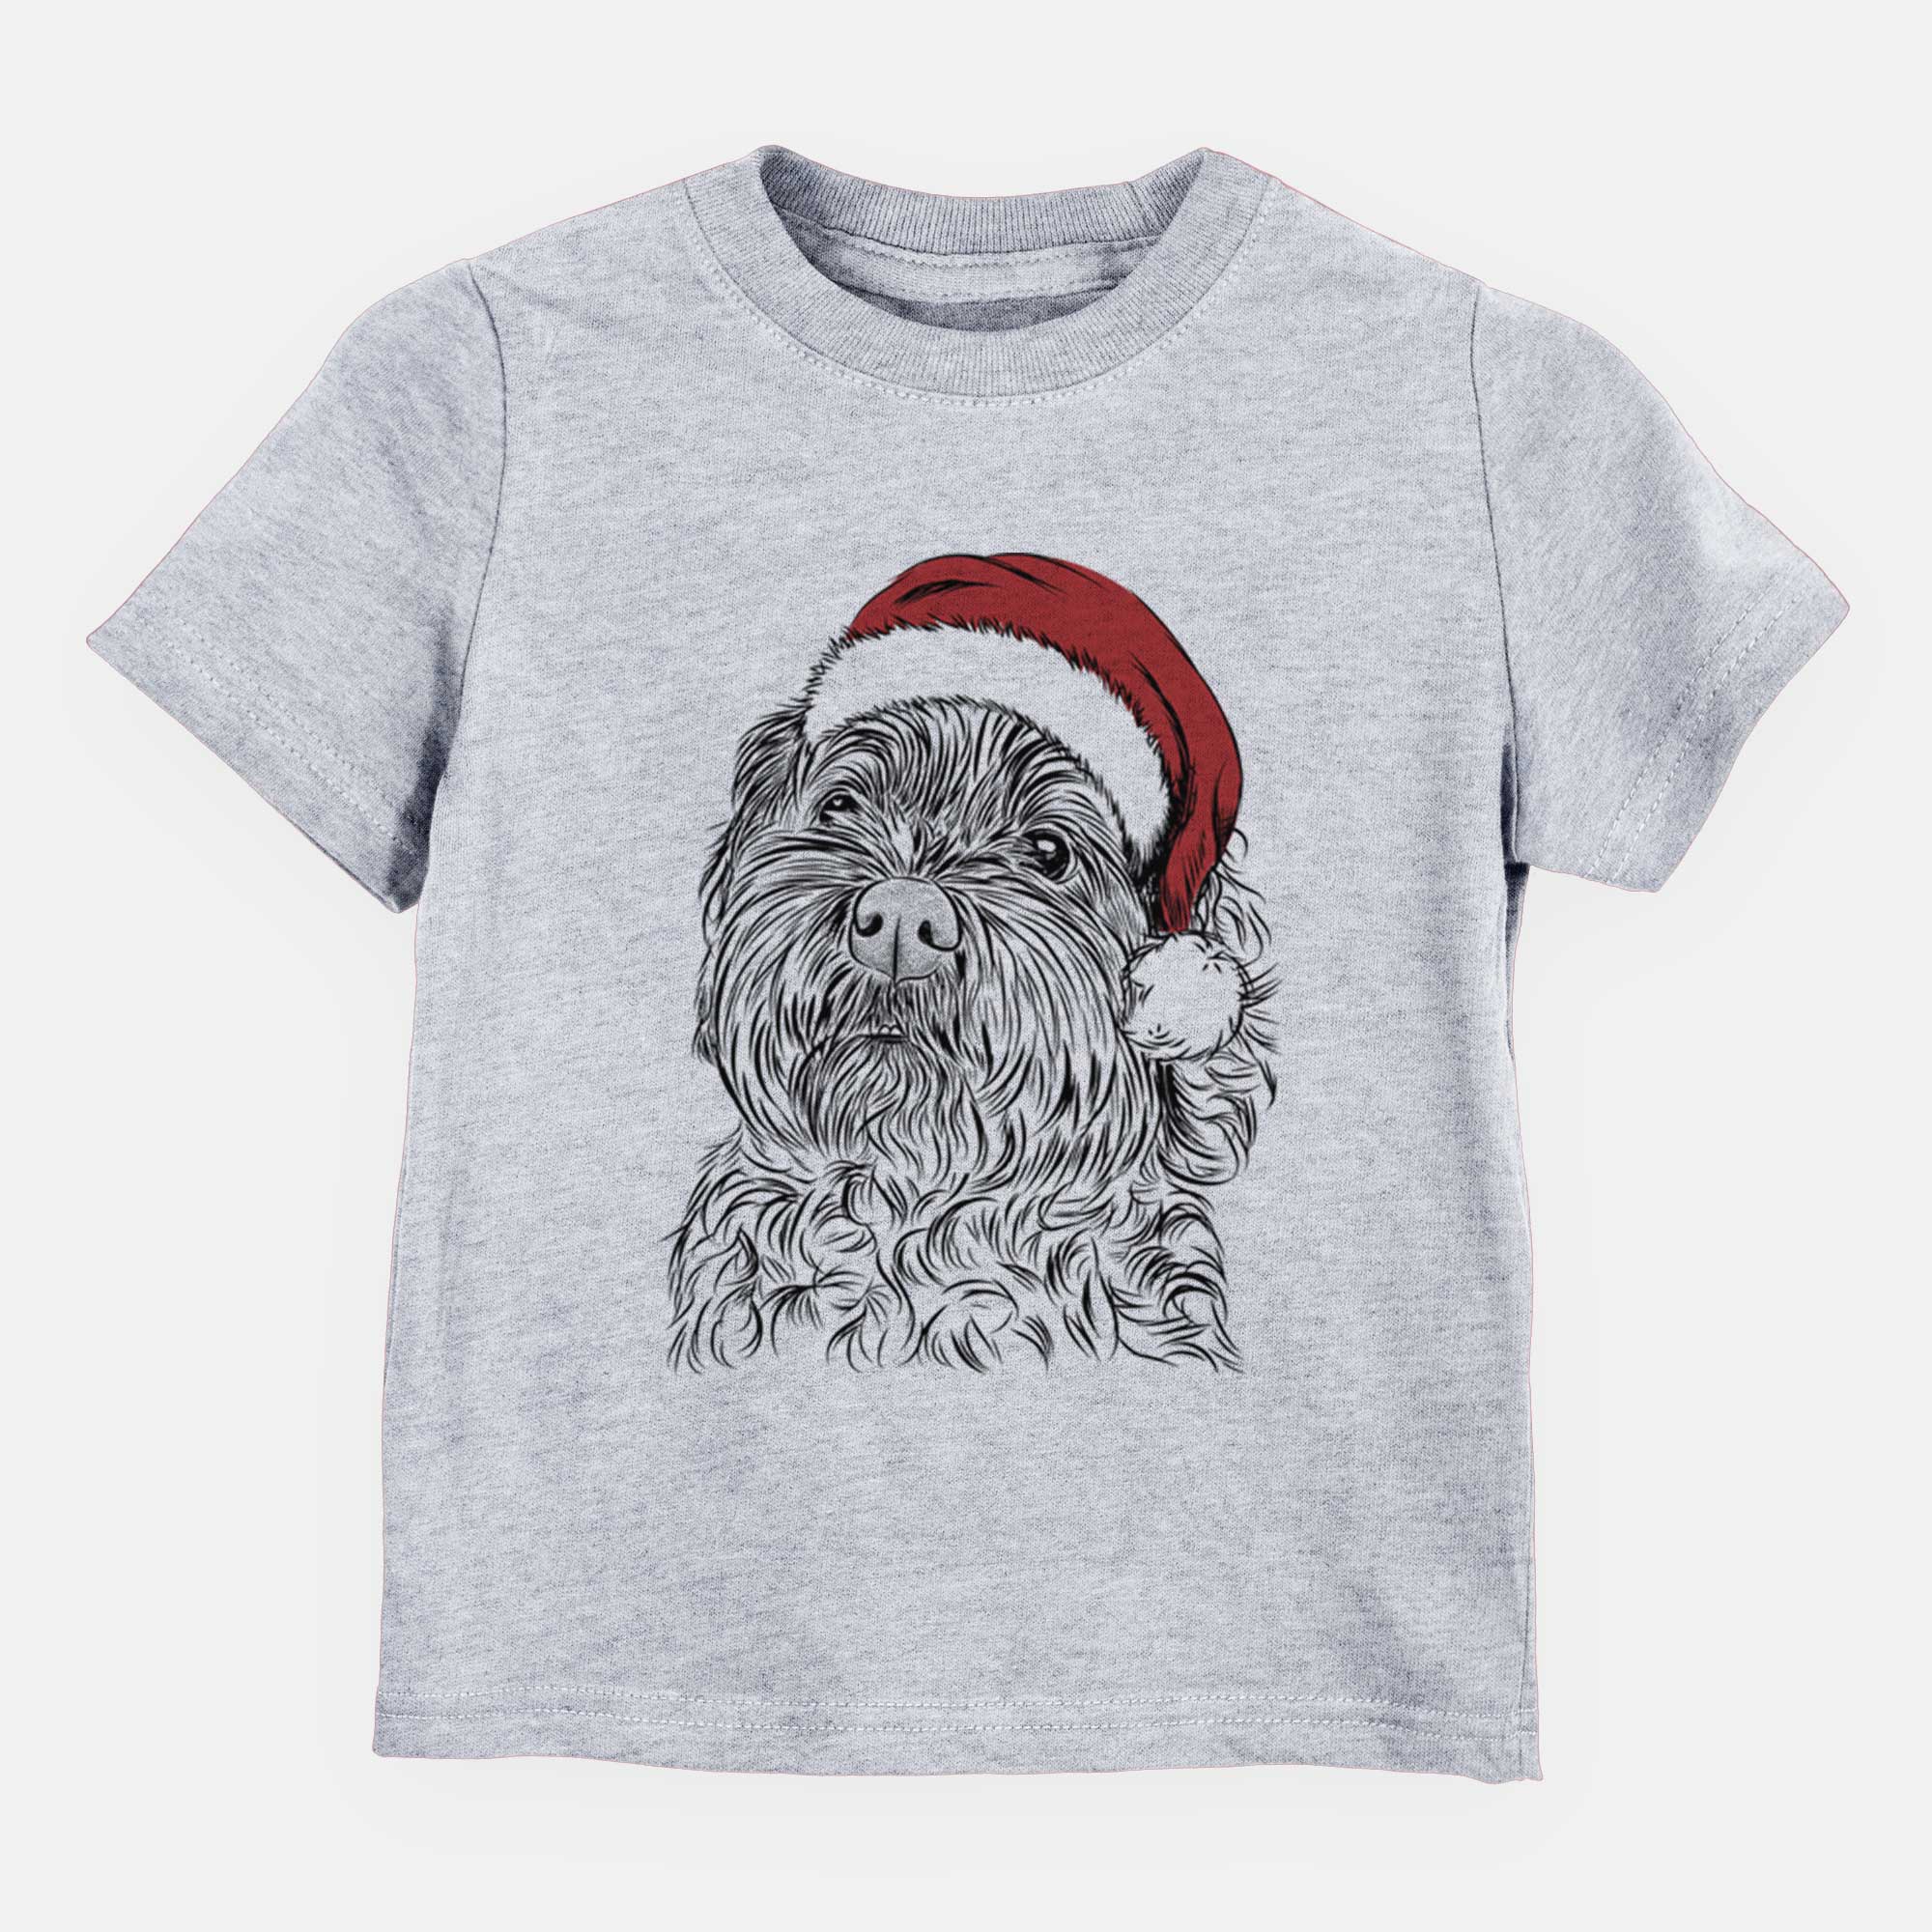 Santa Maggie Girl the Cockapoo - Kids/Youth/Toddler Shirt